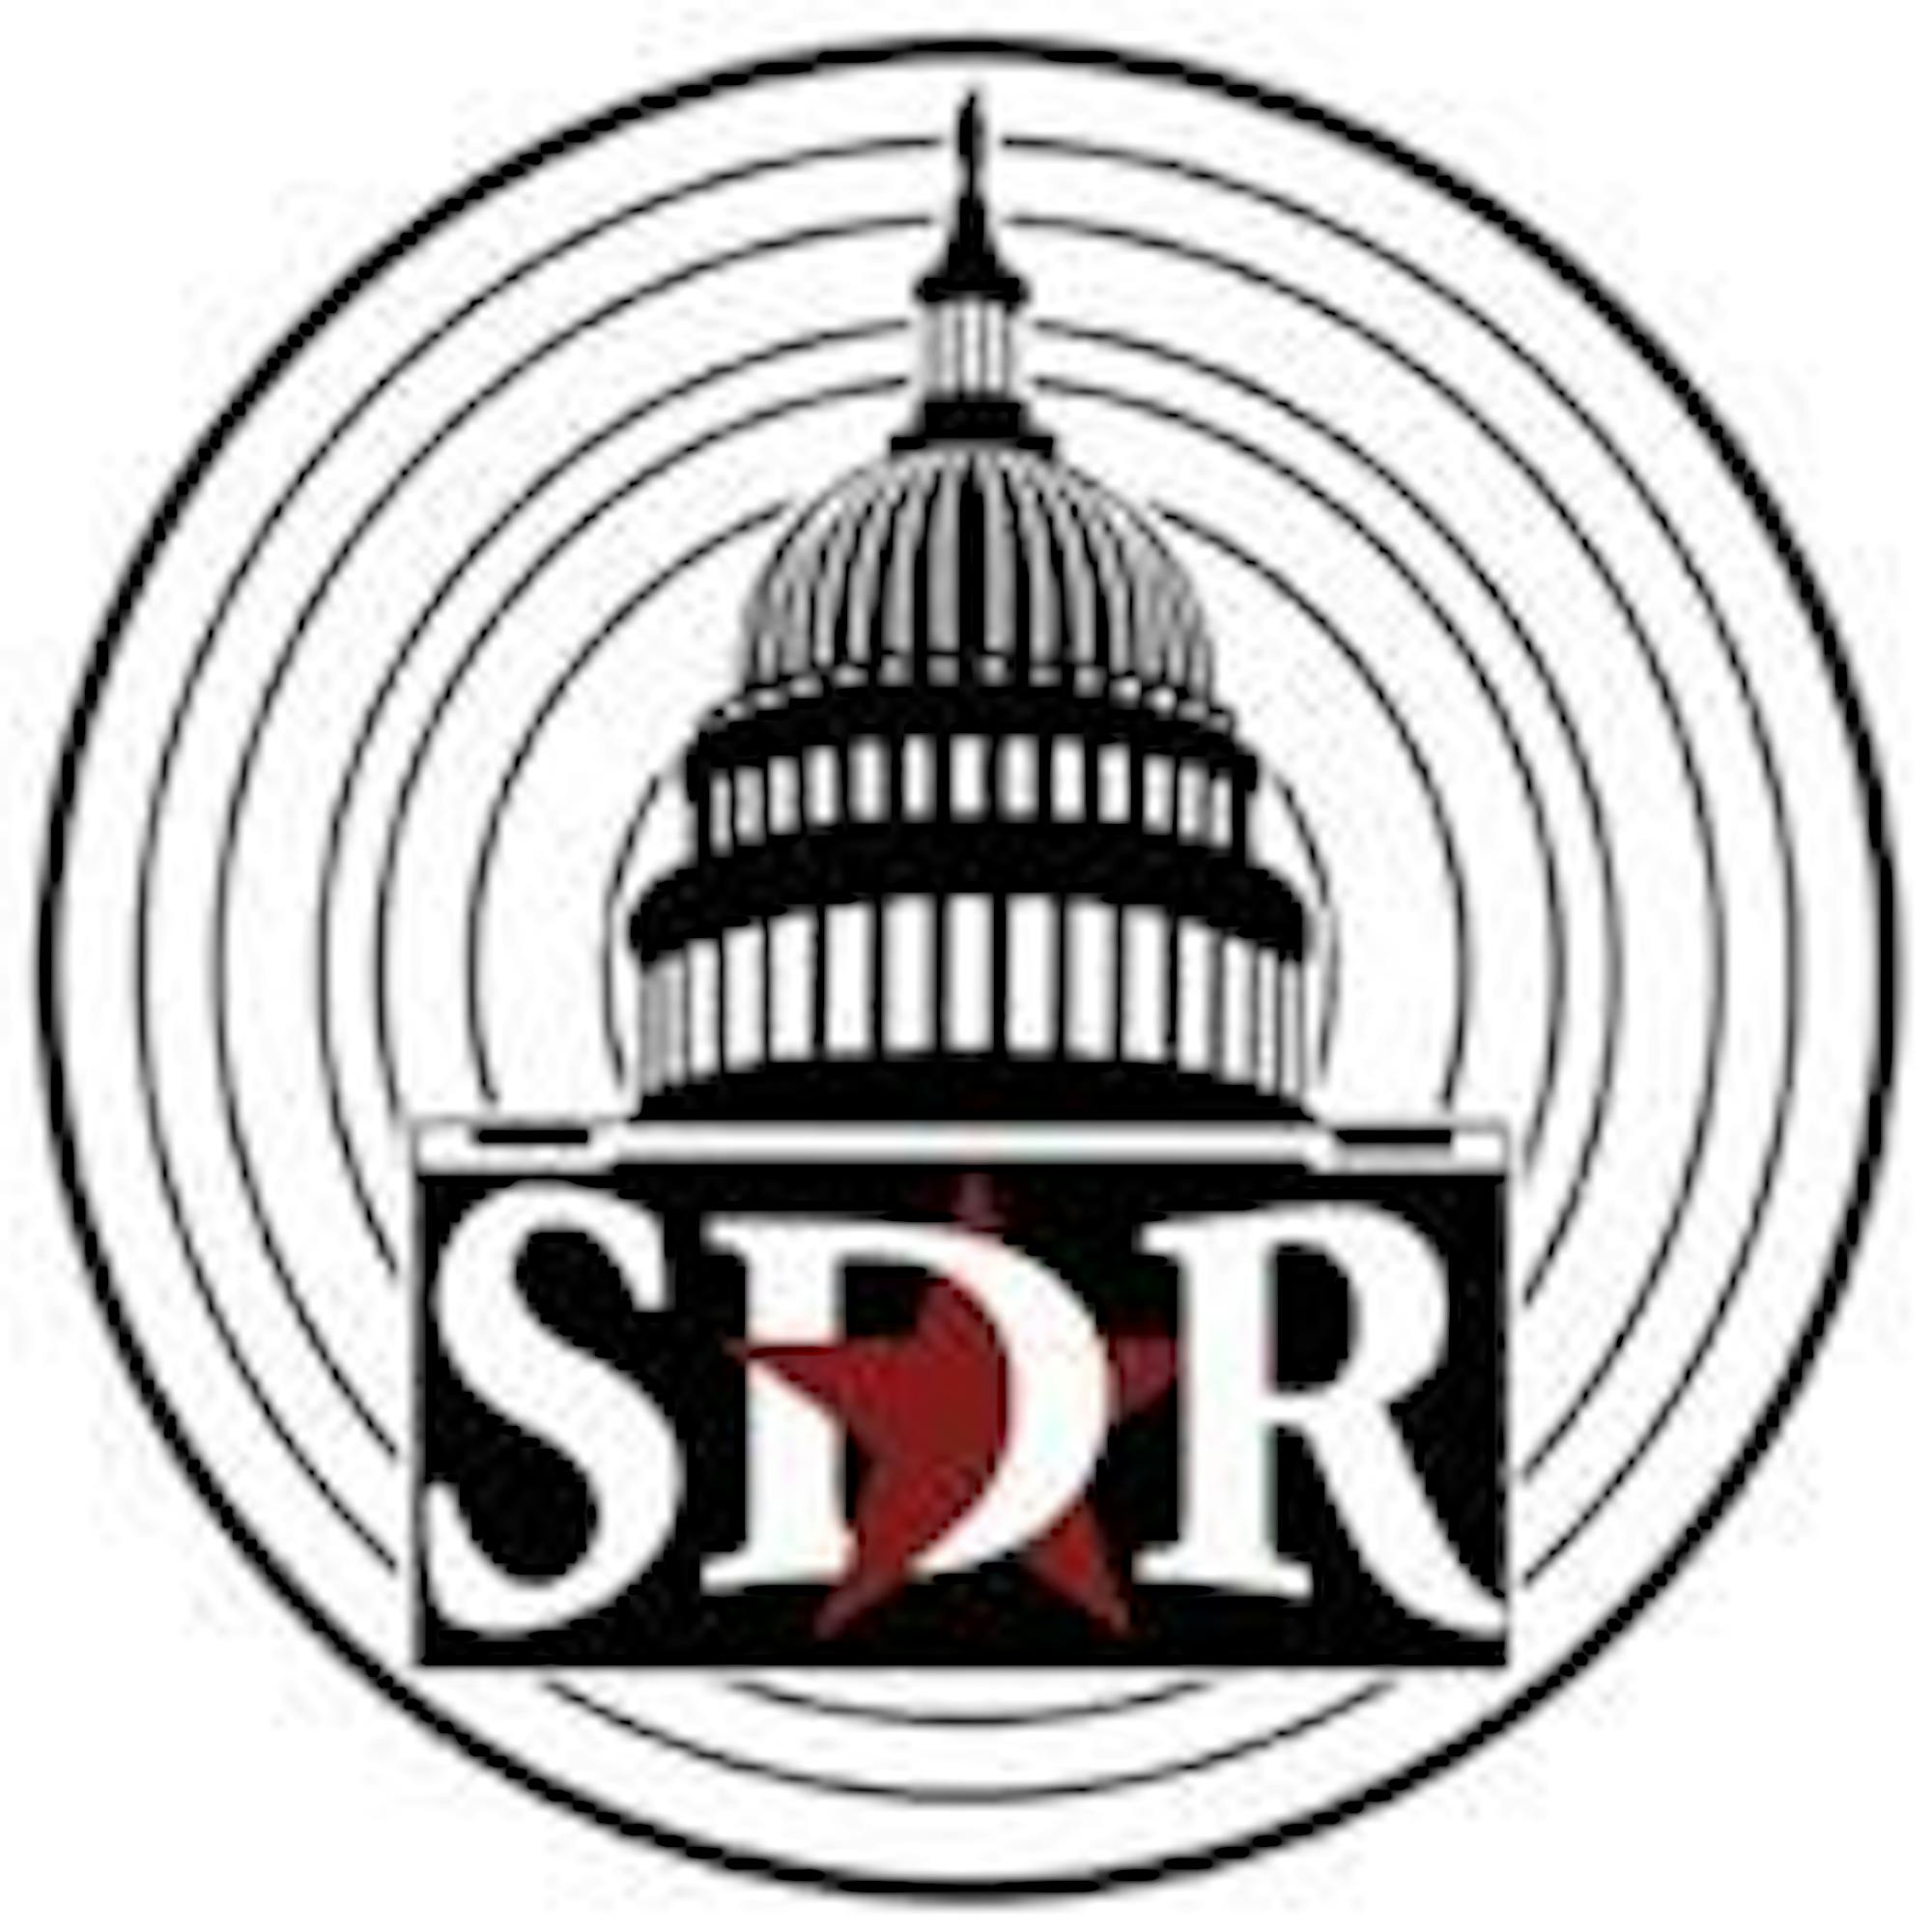 SDR Logo.jpeg